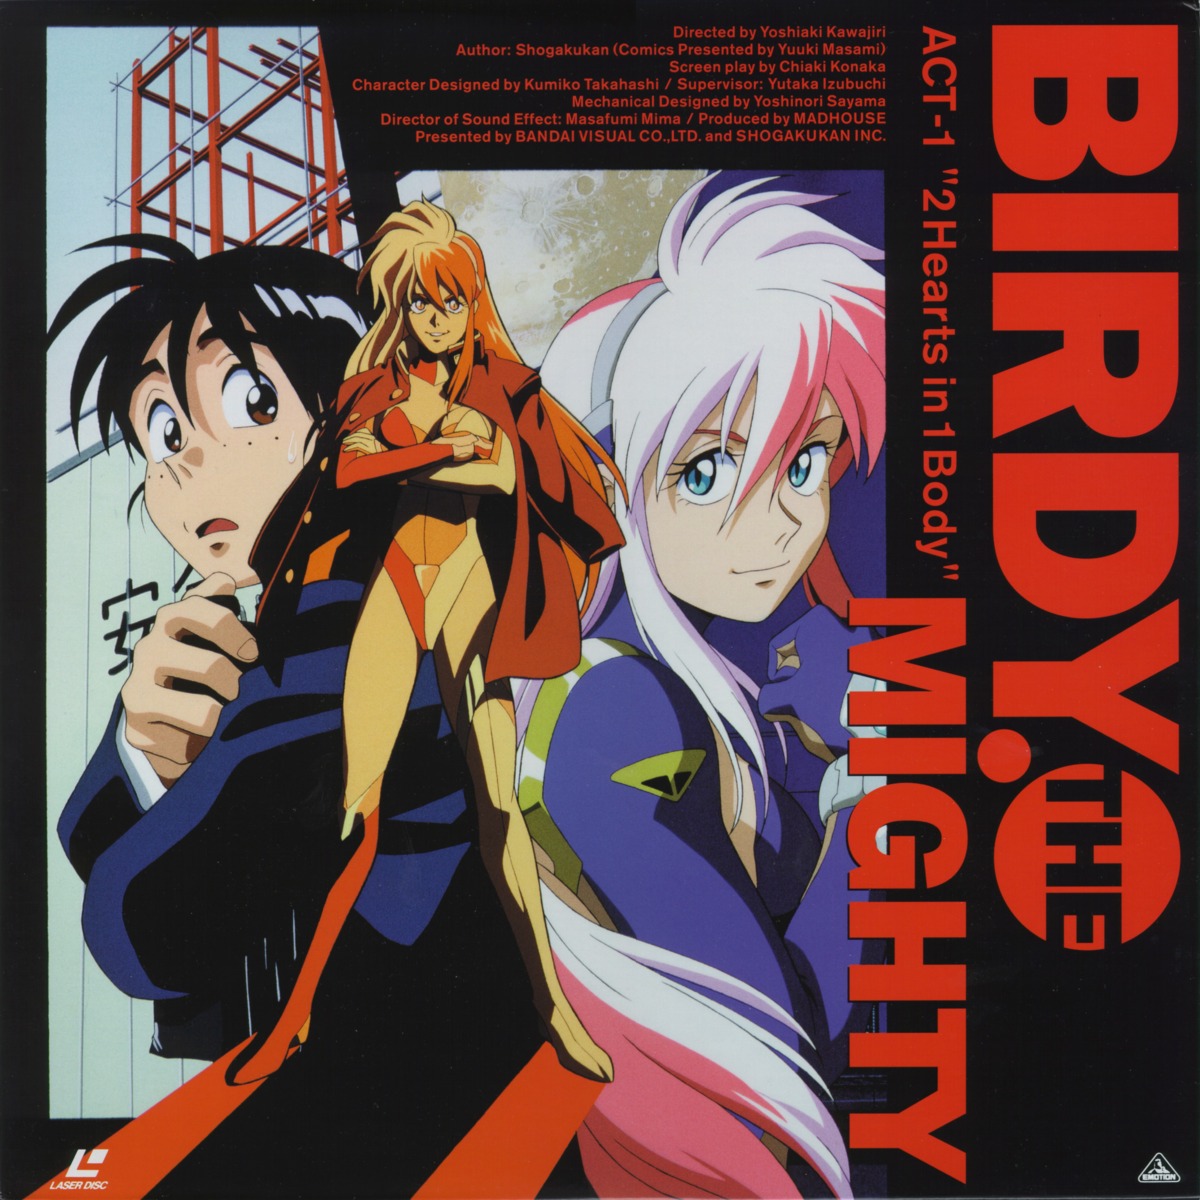 birdy_cephon_altera birdy_the_mighty disc_cover sakurai_kunihiko screening takahashi_kumiko